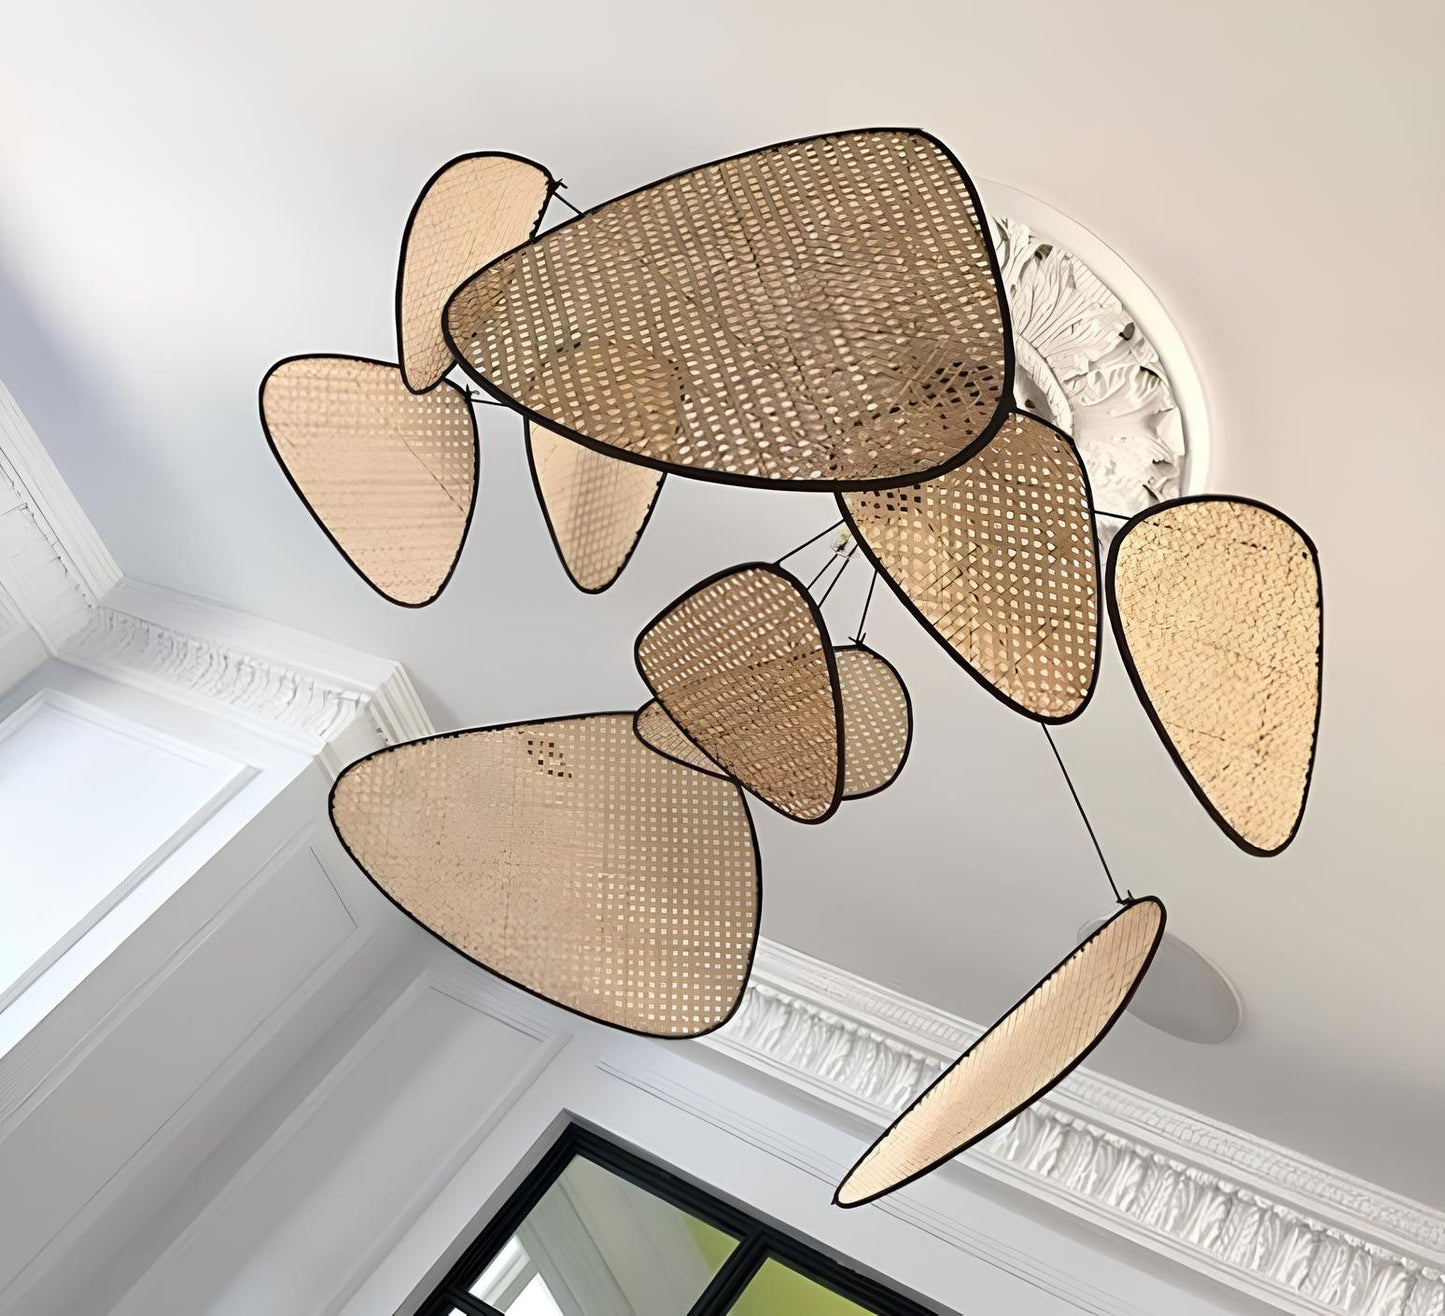 Bamboo Hanging lamp for Living Room | Rattan Pendant light | Cane ceiling light - Ishank - Akway